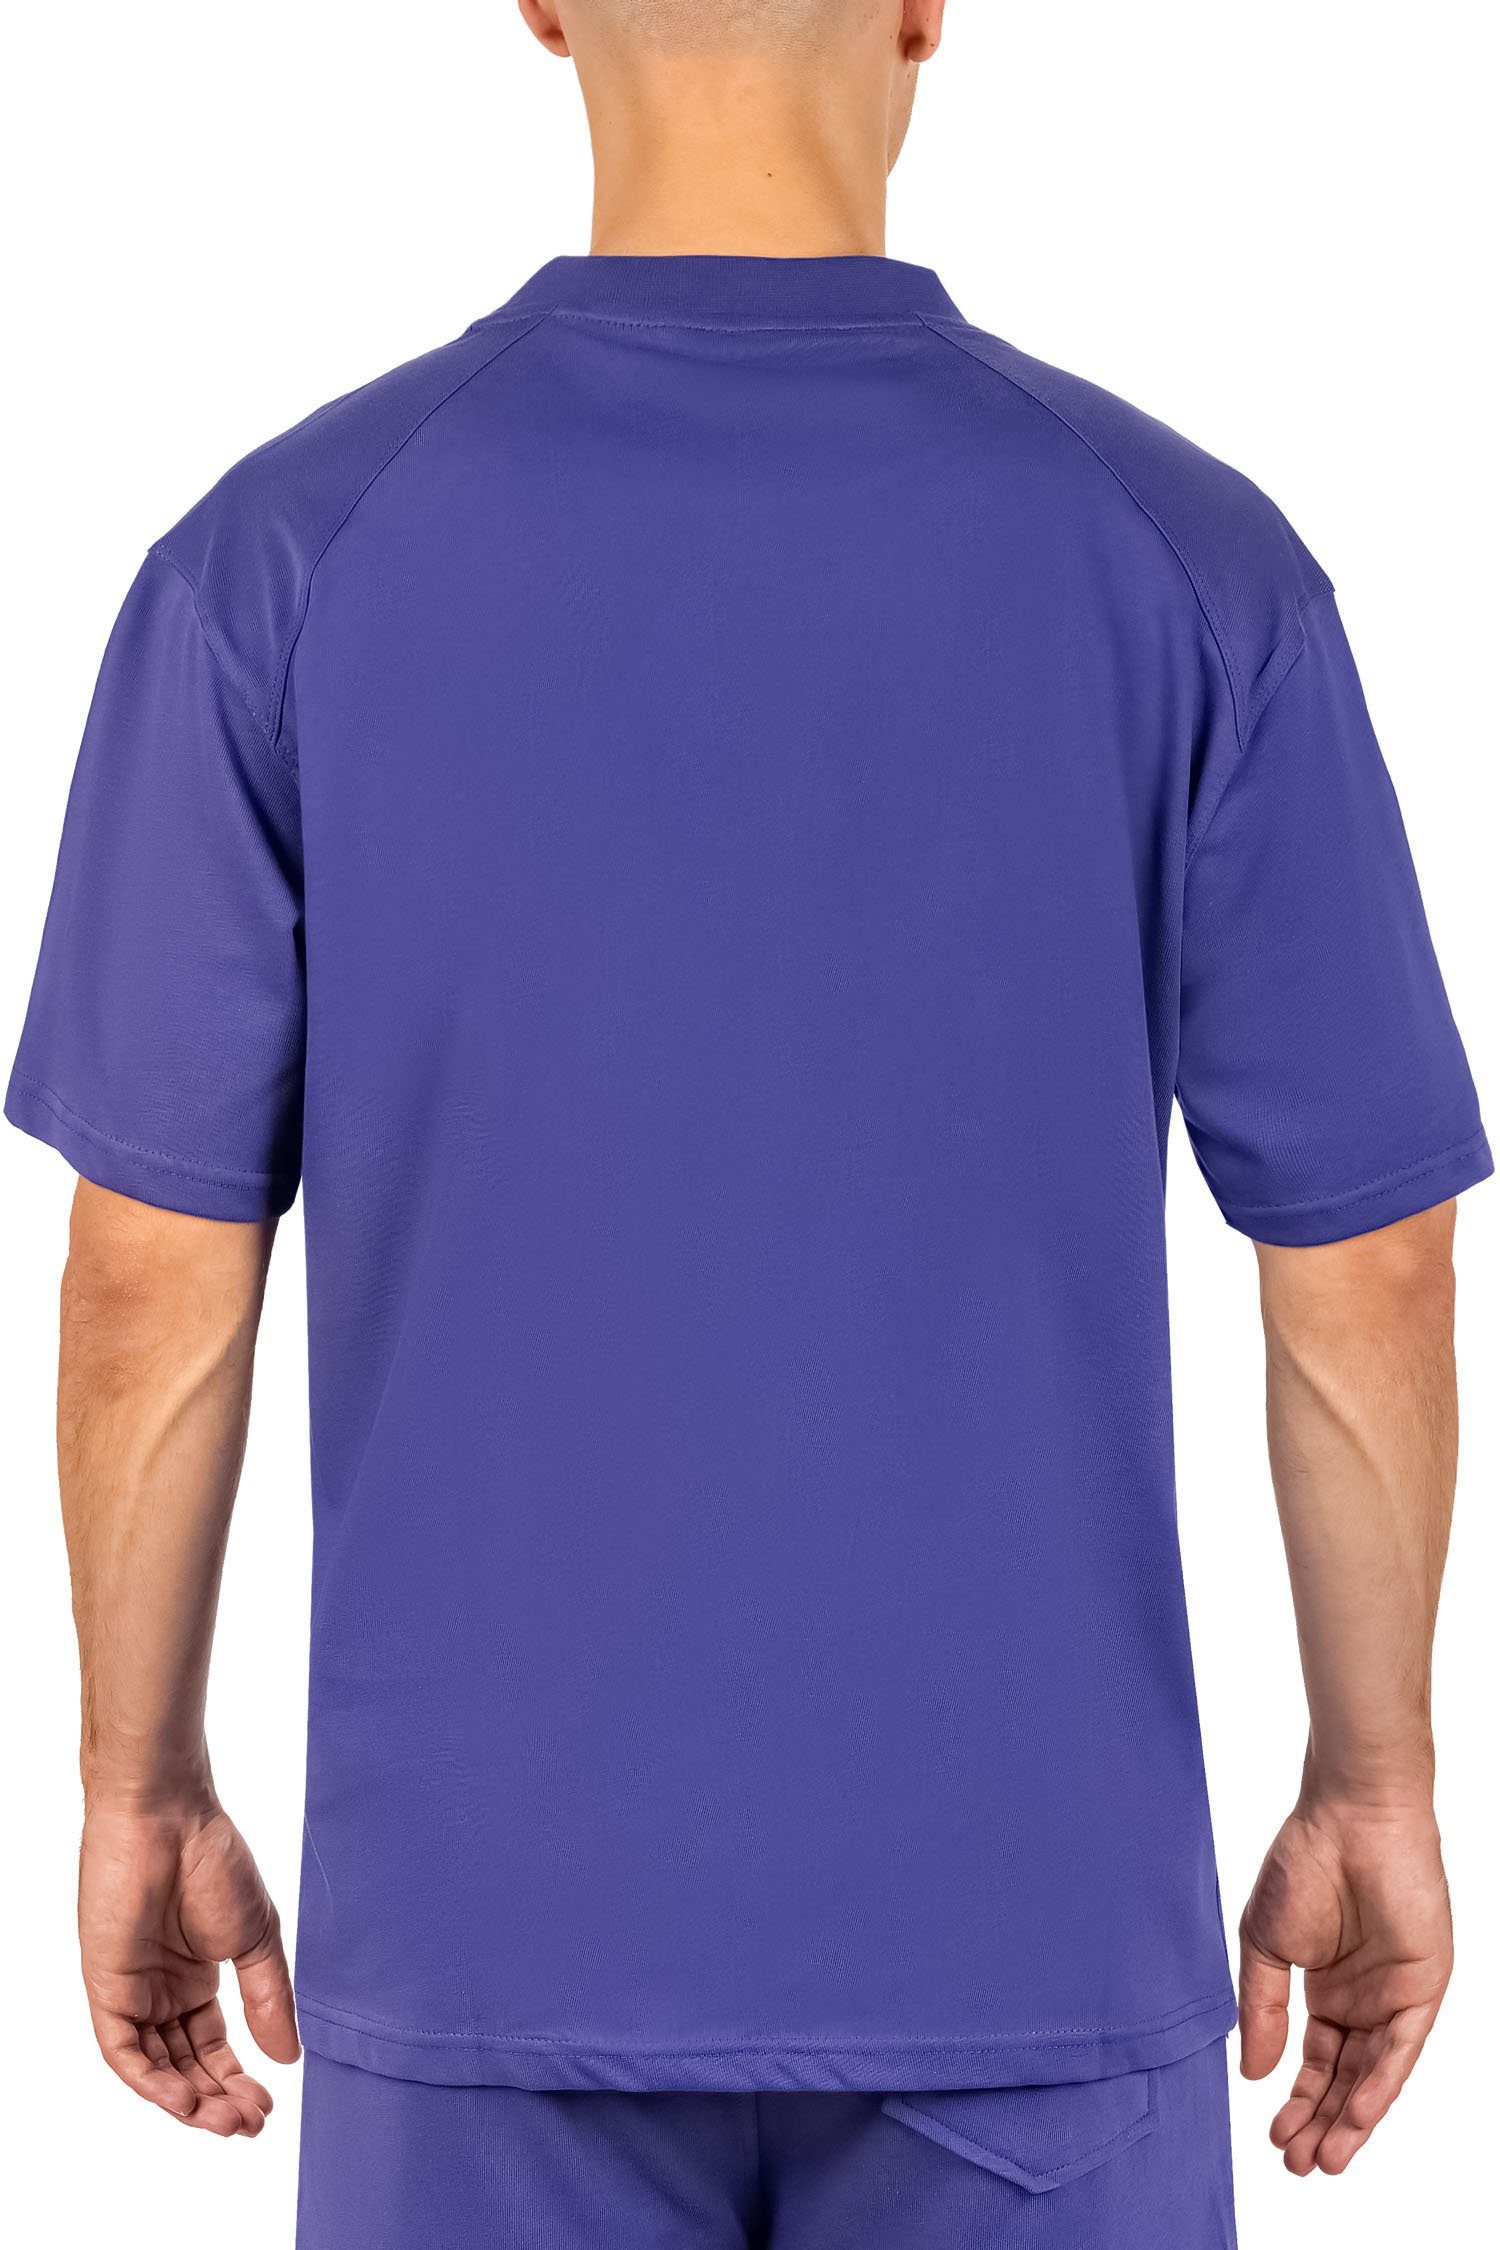 Kragen Stitching 23RS041 Kurzarm Lila Reichstadt mit Casual T-shirt Oversize-Shirt am (1-tlg)